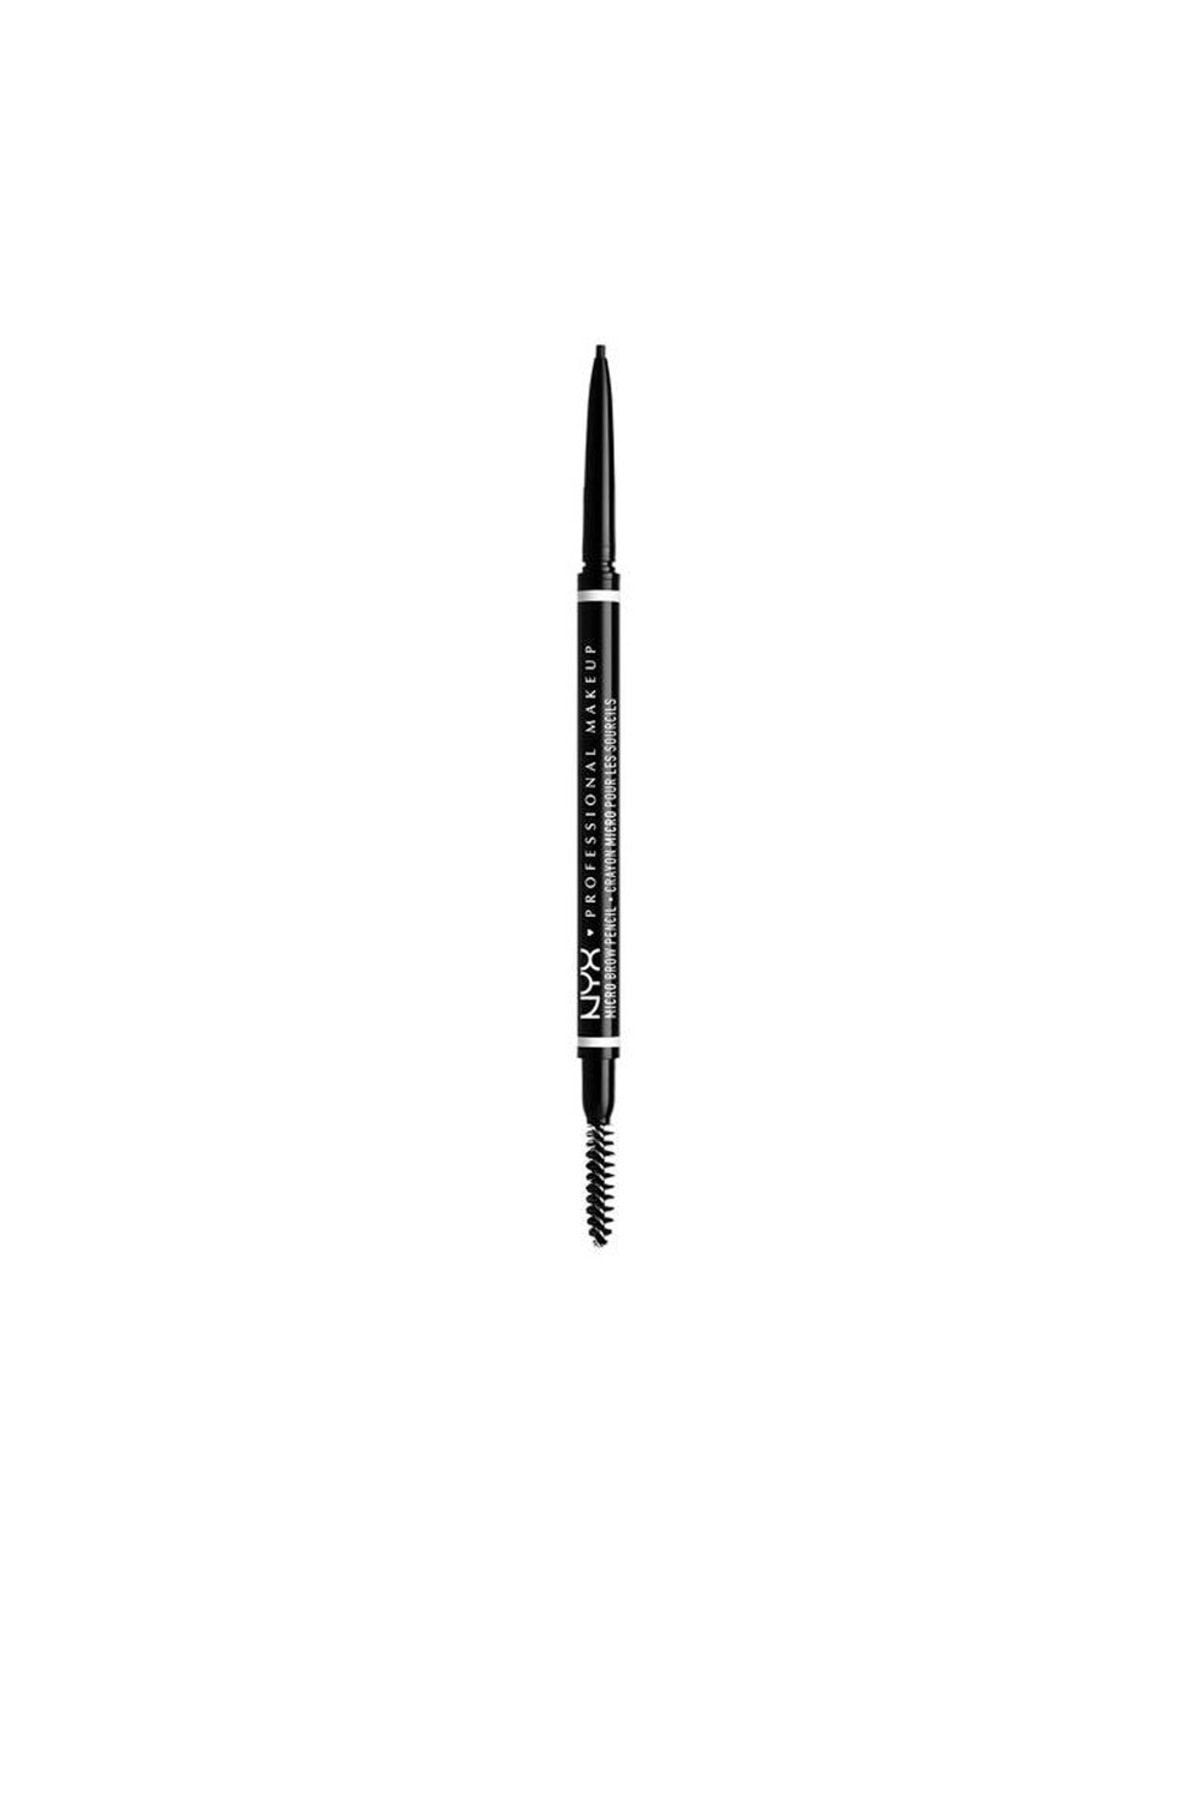 NYX Professional Makeup Micro Brow Pencil - g Trendyol #schwarz 0,5